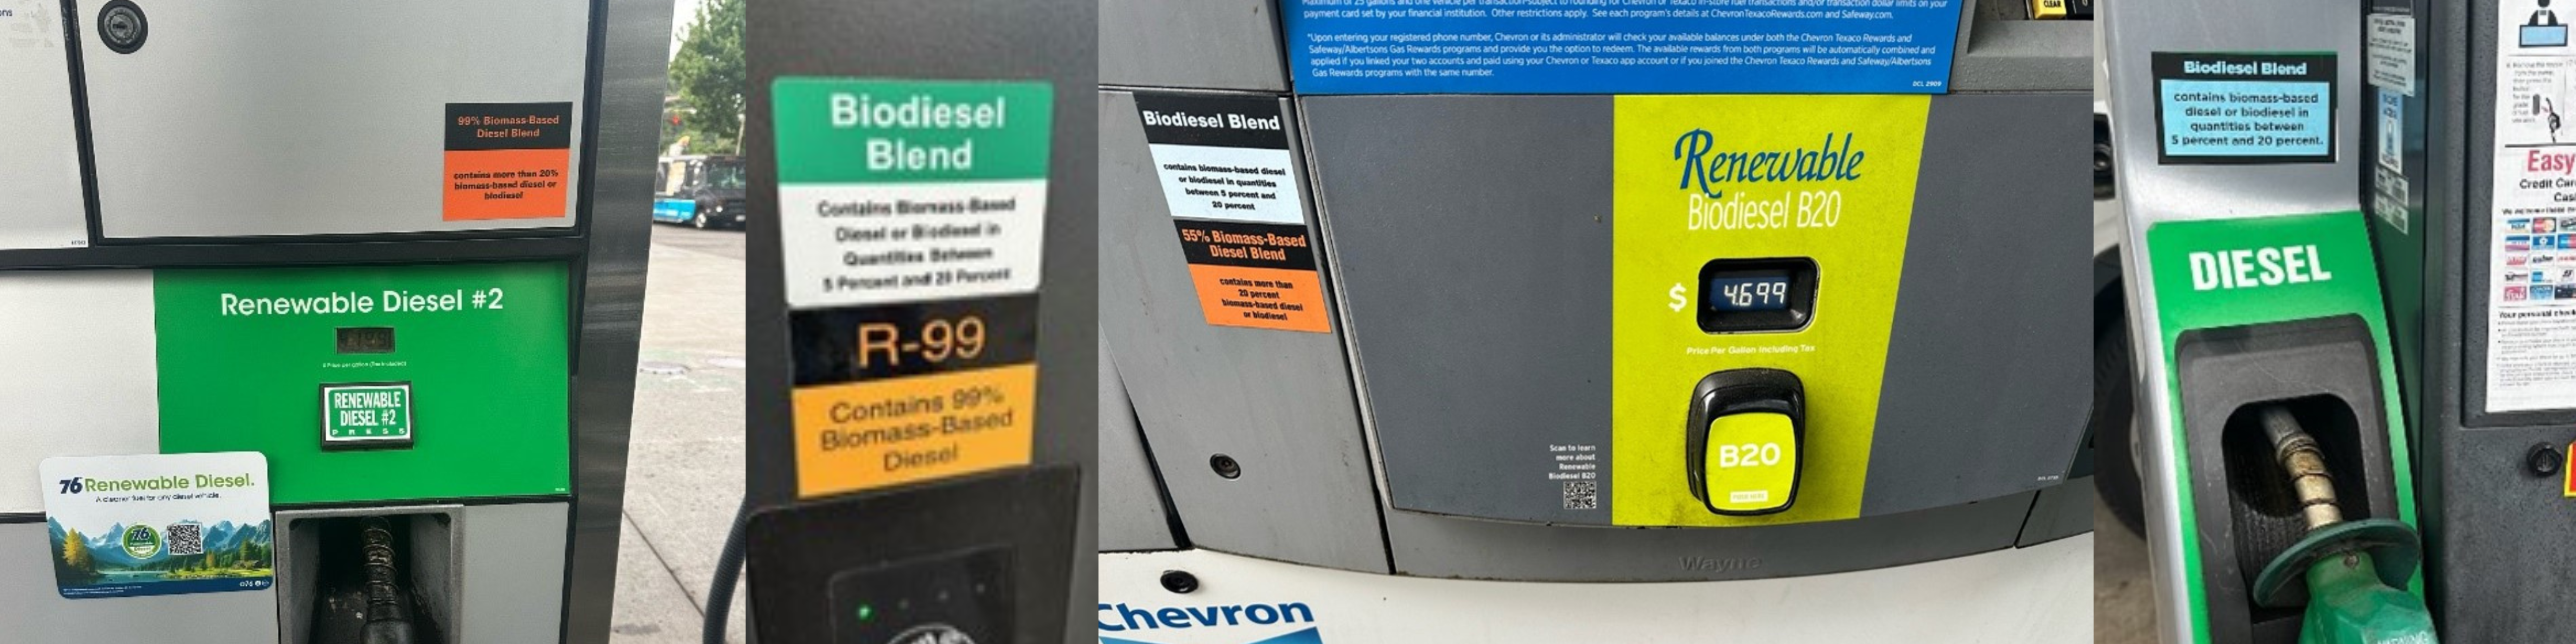 Retail Diesel Dispenser Example